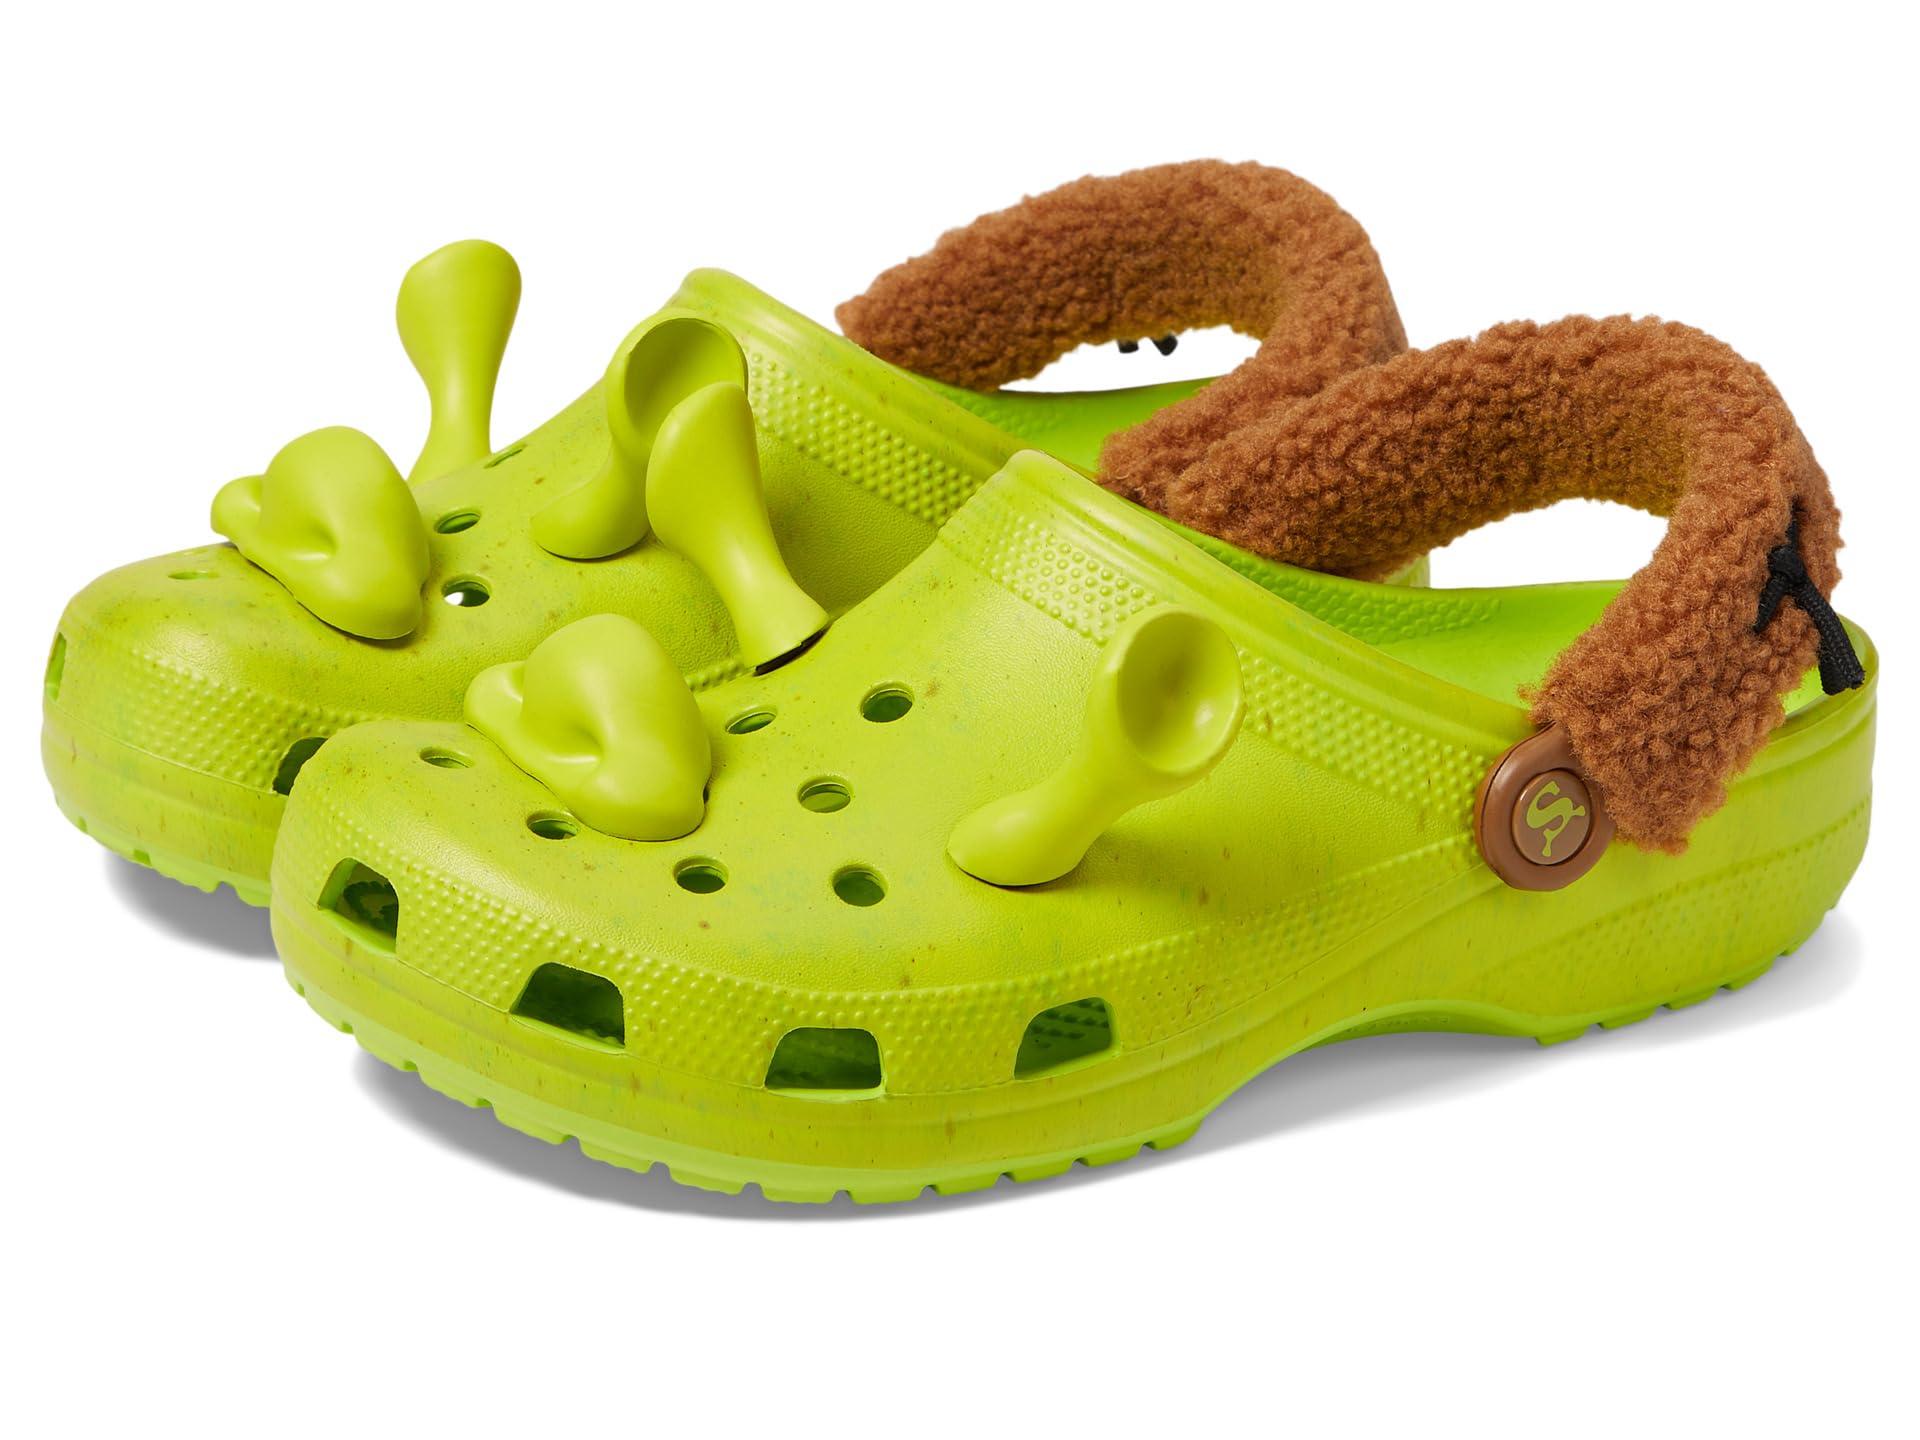 Shrek Crocs: Where can I buy the DreamWorks clogs?